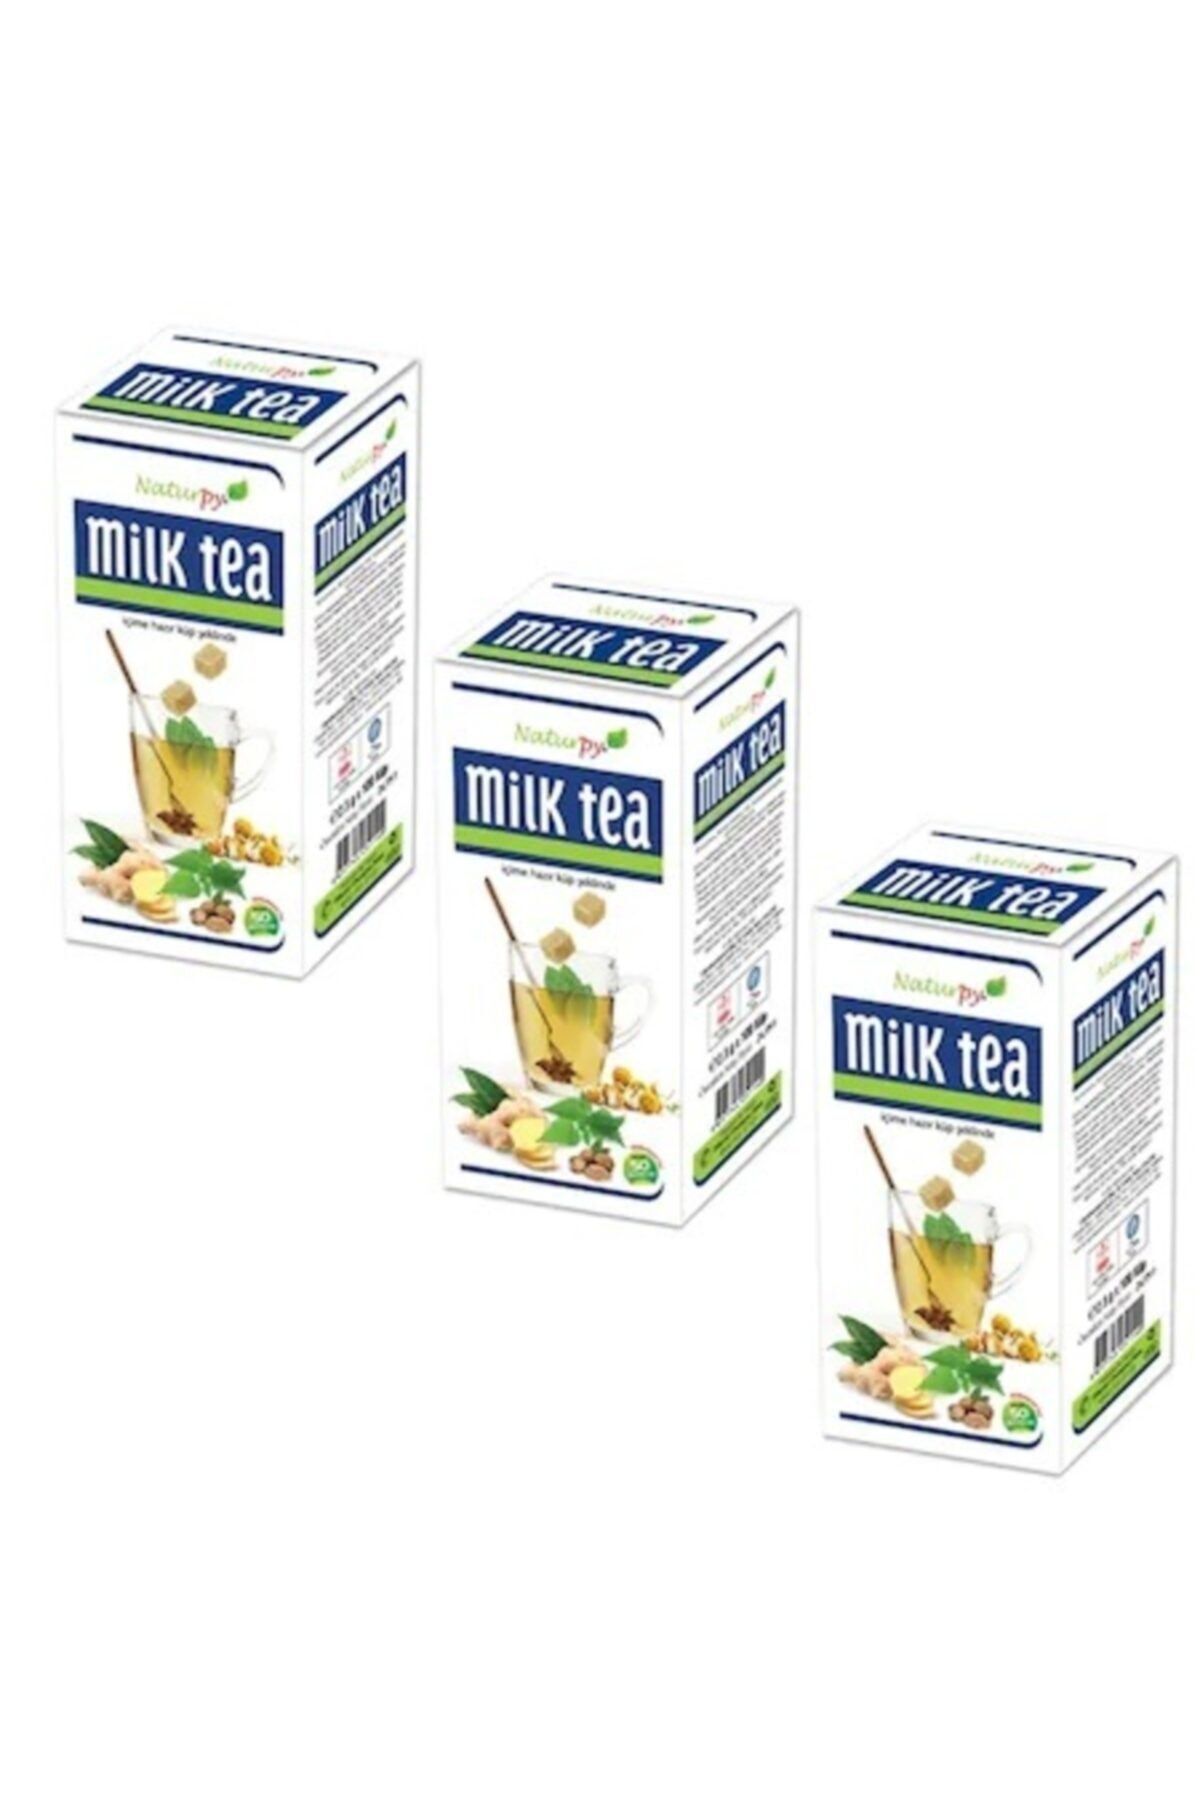 Naturpy 3 Adet Milk Tea 250 gr - Emziren Anneler Için